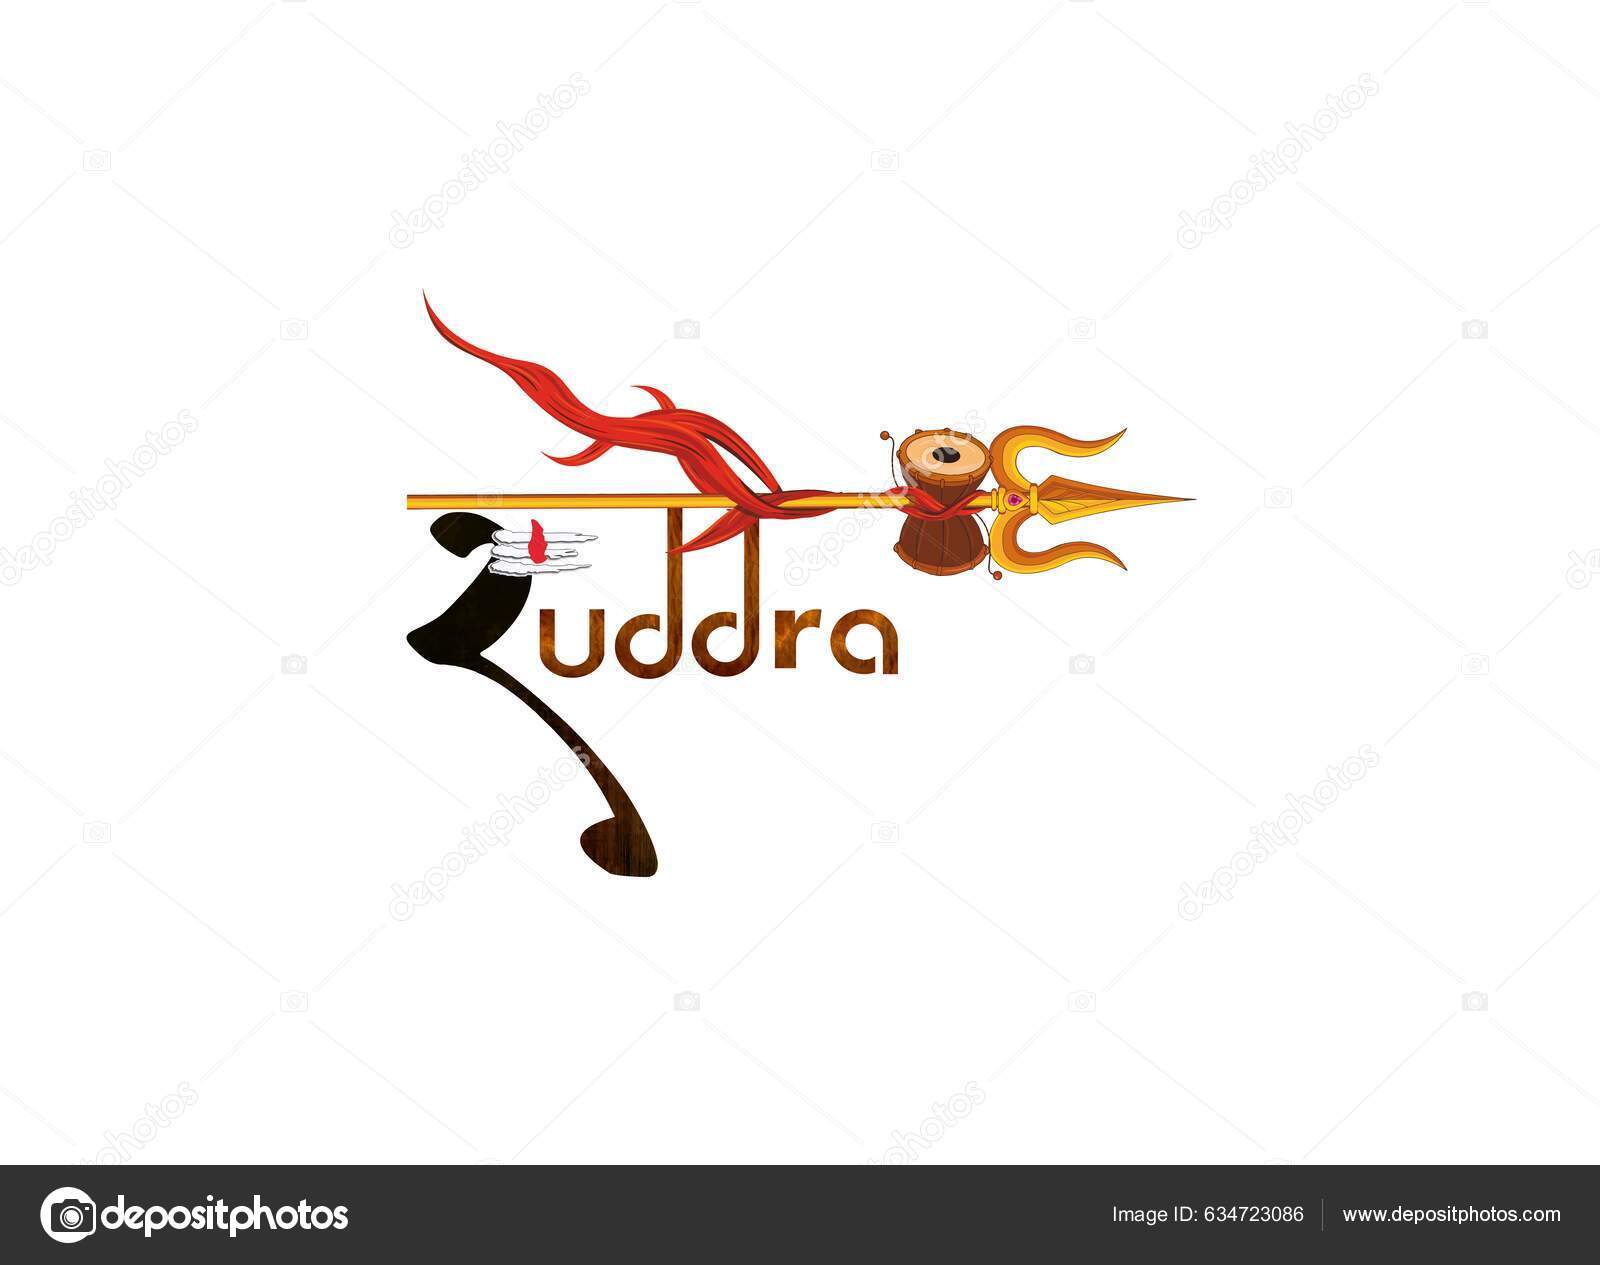 Premium Vector | Lord shiva minimal logo illustration with har har mahadev  typography